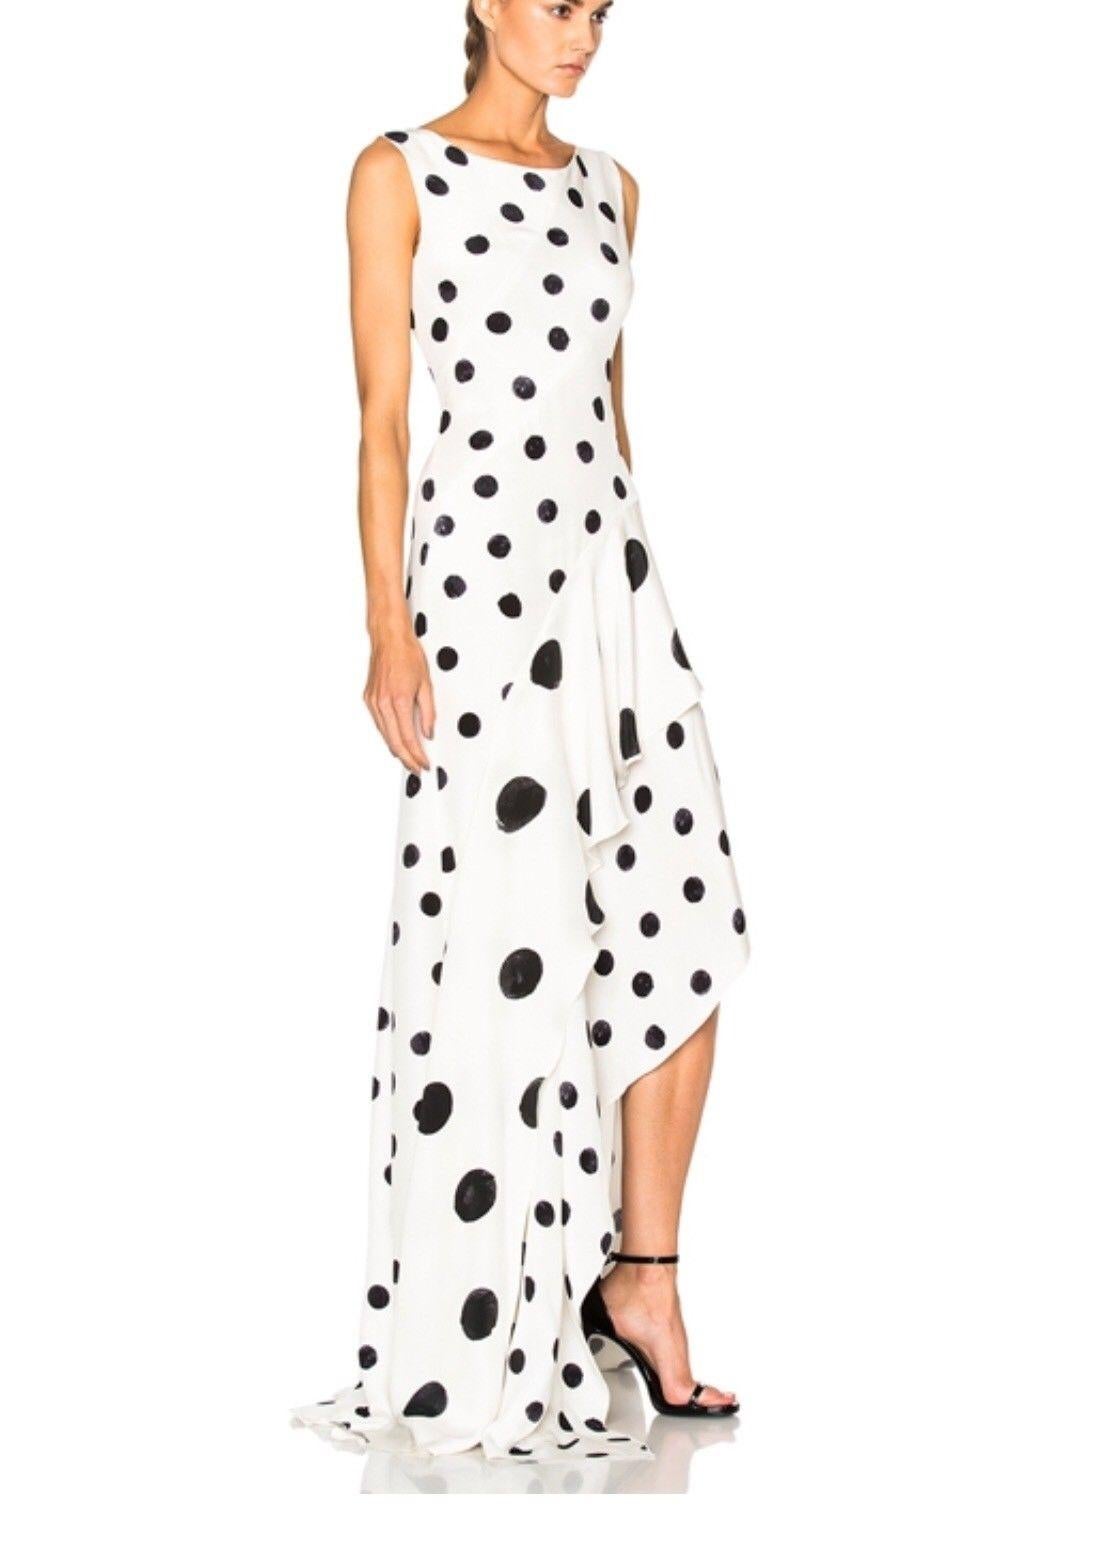 New Oscar De La Renta White Polka Dot Silk Crepe Tiered Skirt Dress Gown size 4 For Sale 1